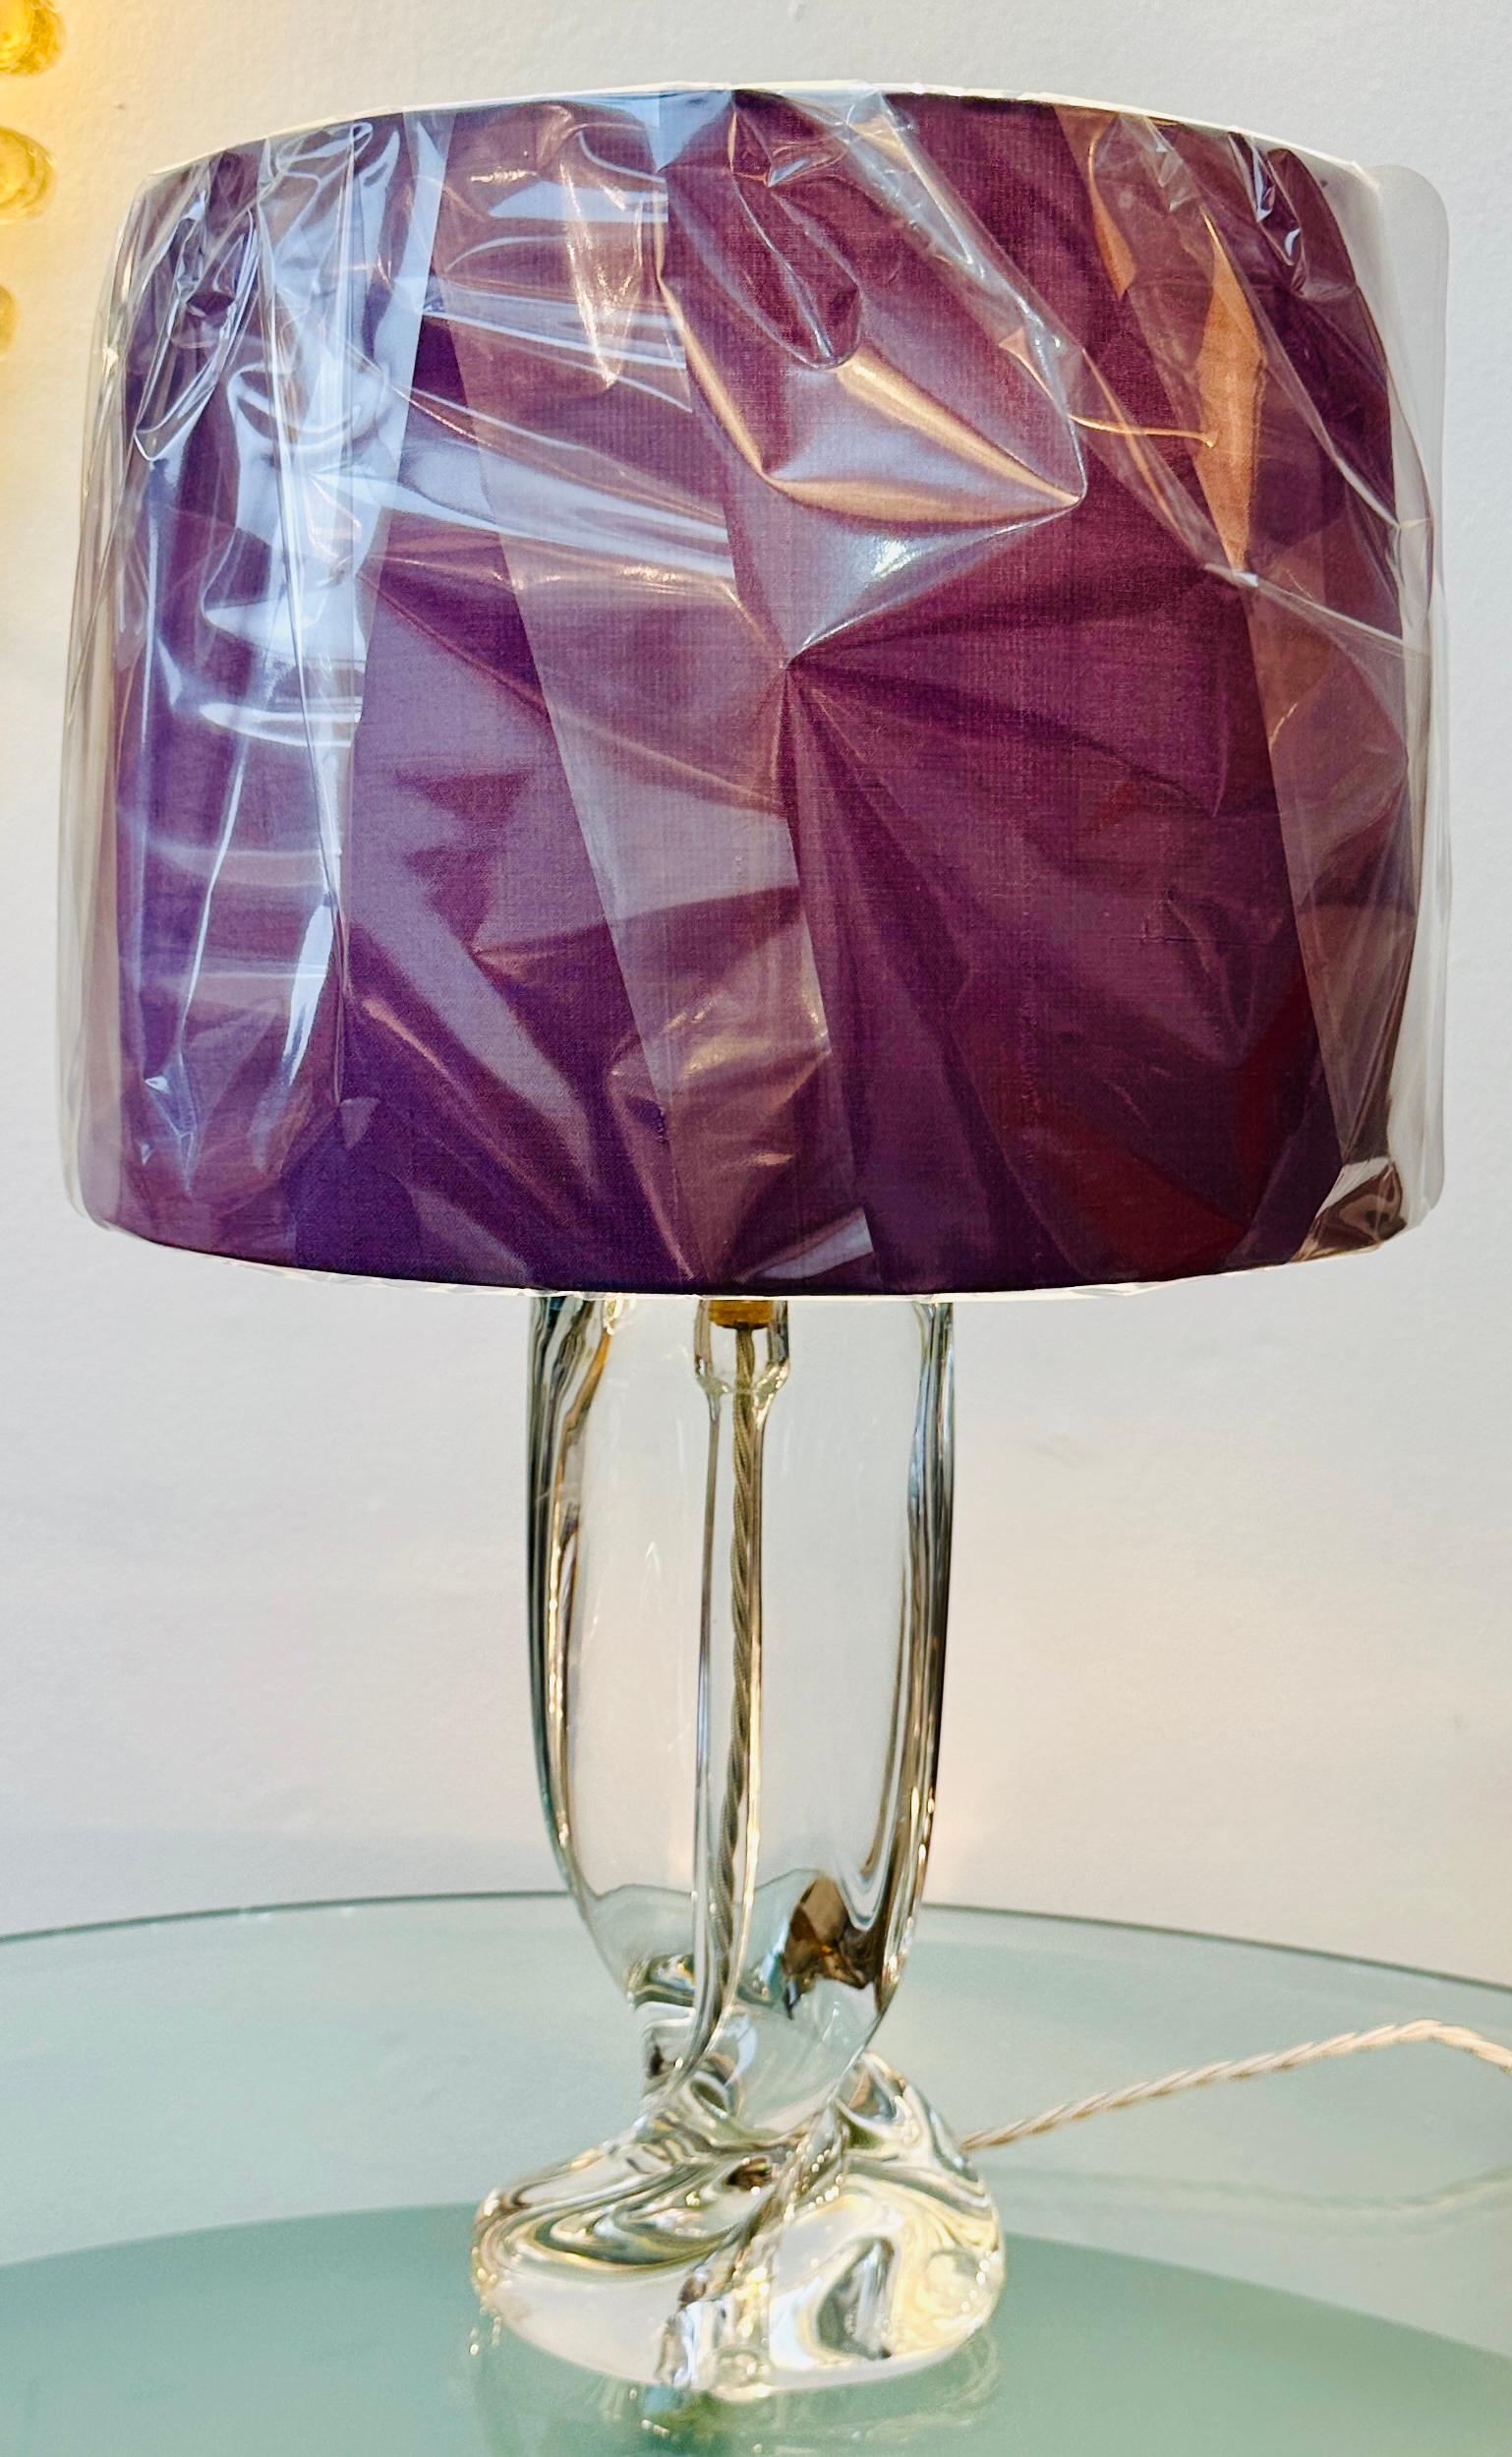 Hollywood Regency 1950s Modernist French Cristalleries De Sèvre Crystal Glass & Chrome Table Lamp For Sale